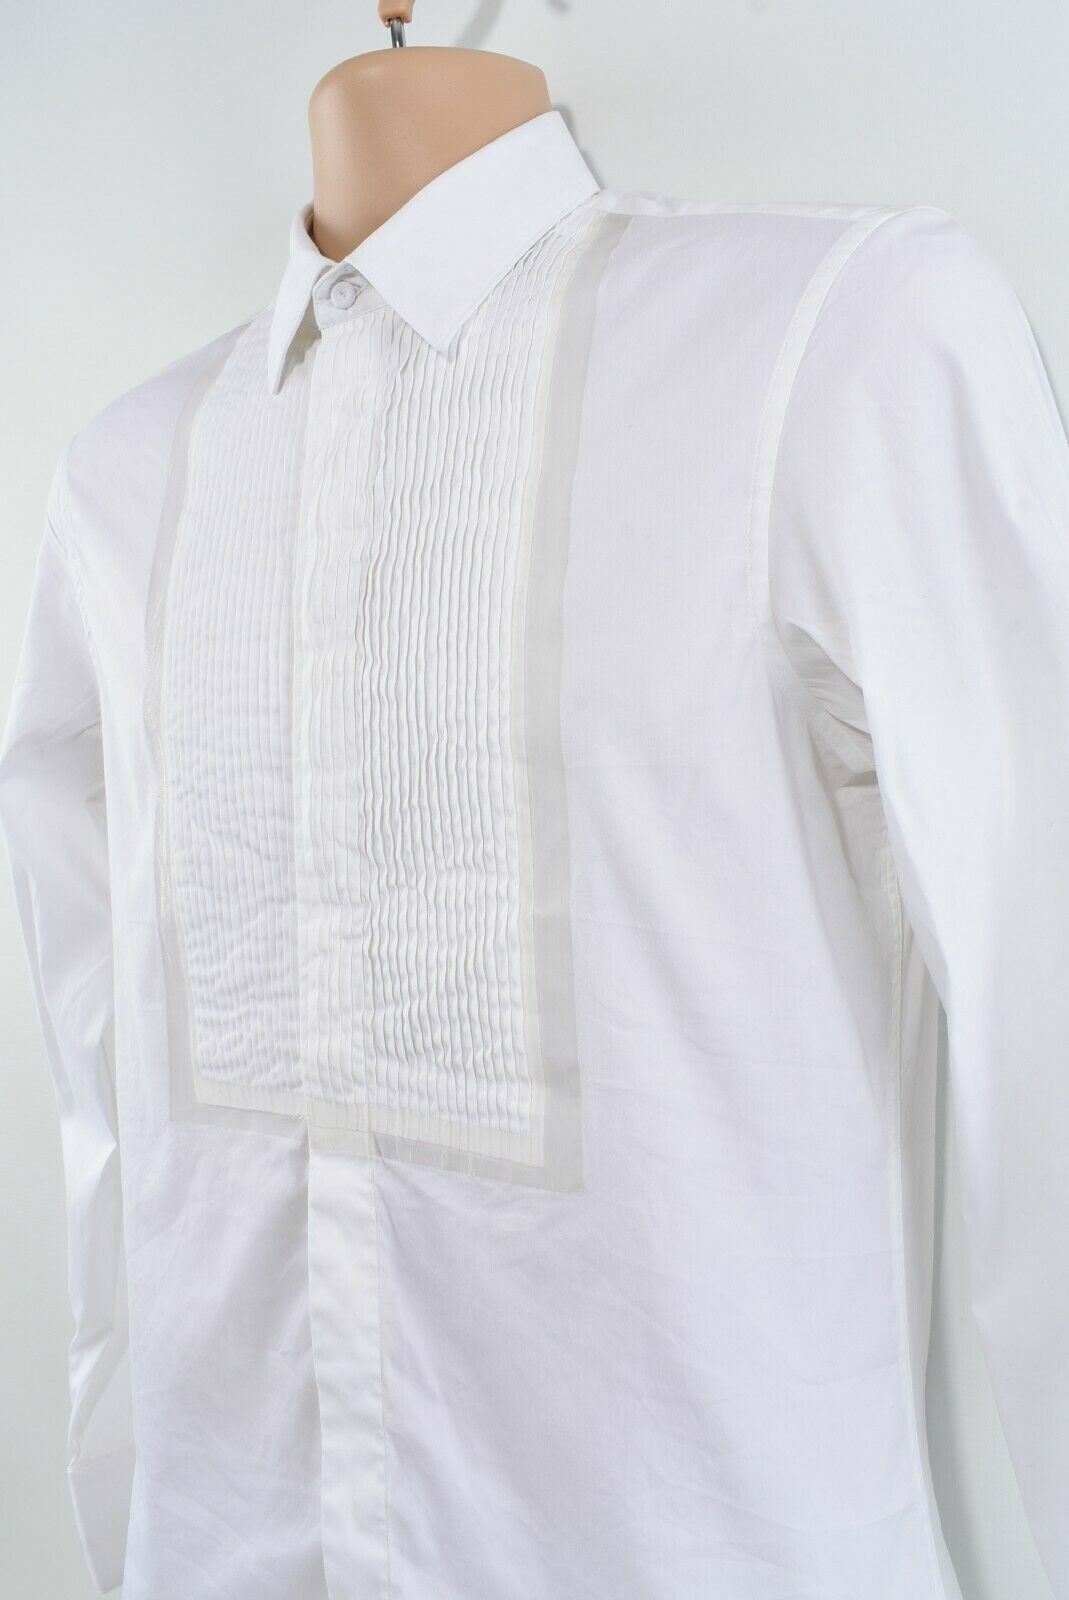 EMPORIO ARMANI Men's Ivory Shirt, Stretch Cotton, size collar 15.5" chest 39"